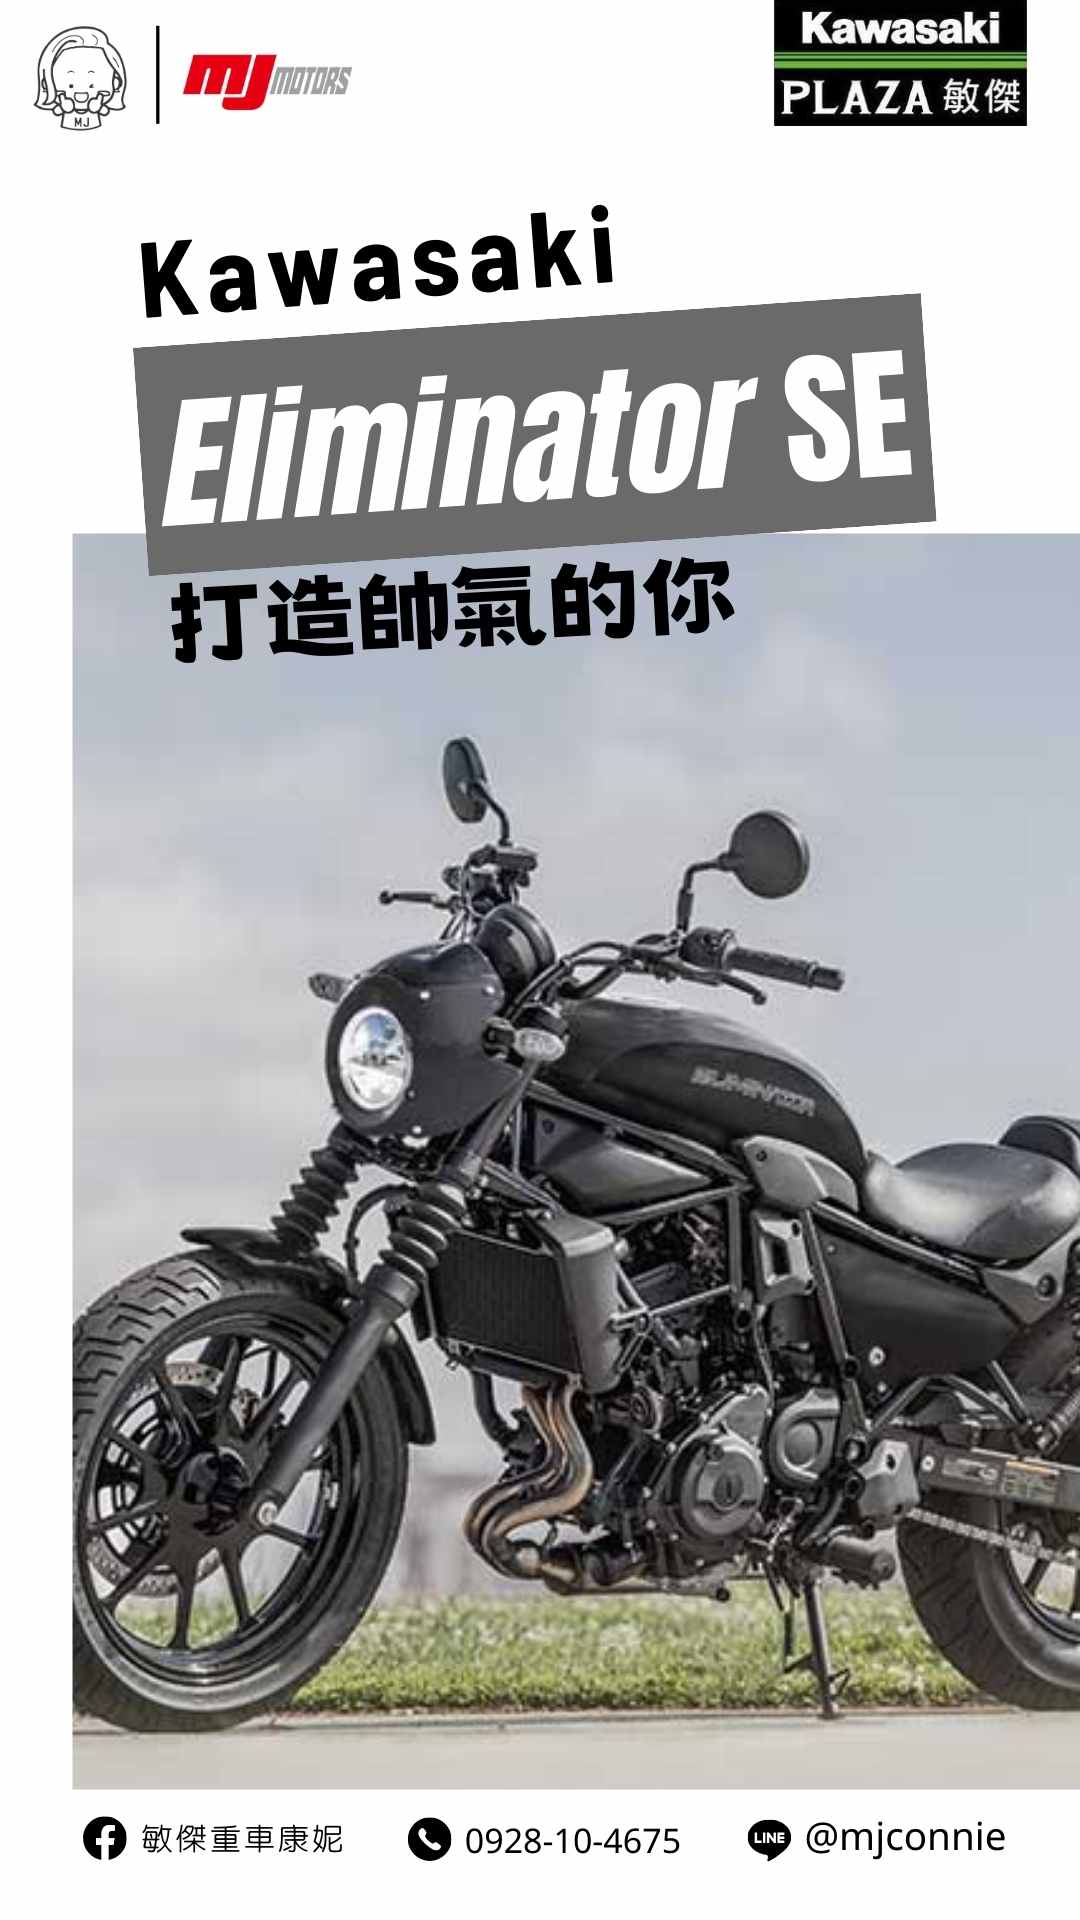 Kawasaki Eliminator新車出售中 『敏傑康妮』Kawasaki Eliminator SE 輕量美式 你們在期待的新款～終於快要引進 現在可跟康妮排序登記！ | 敏傑車業資深銷售專員 康妮 Connie